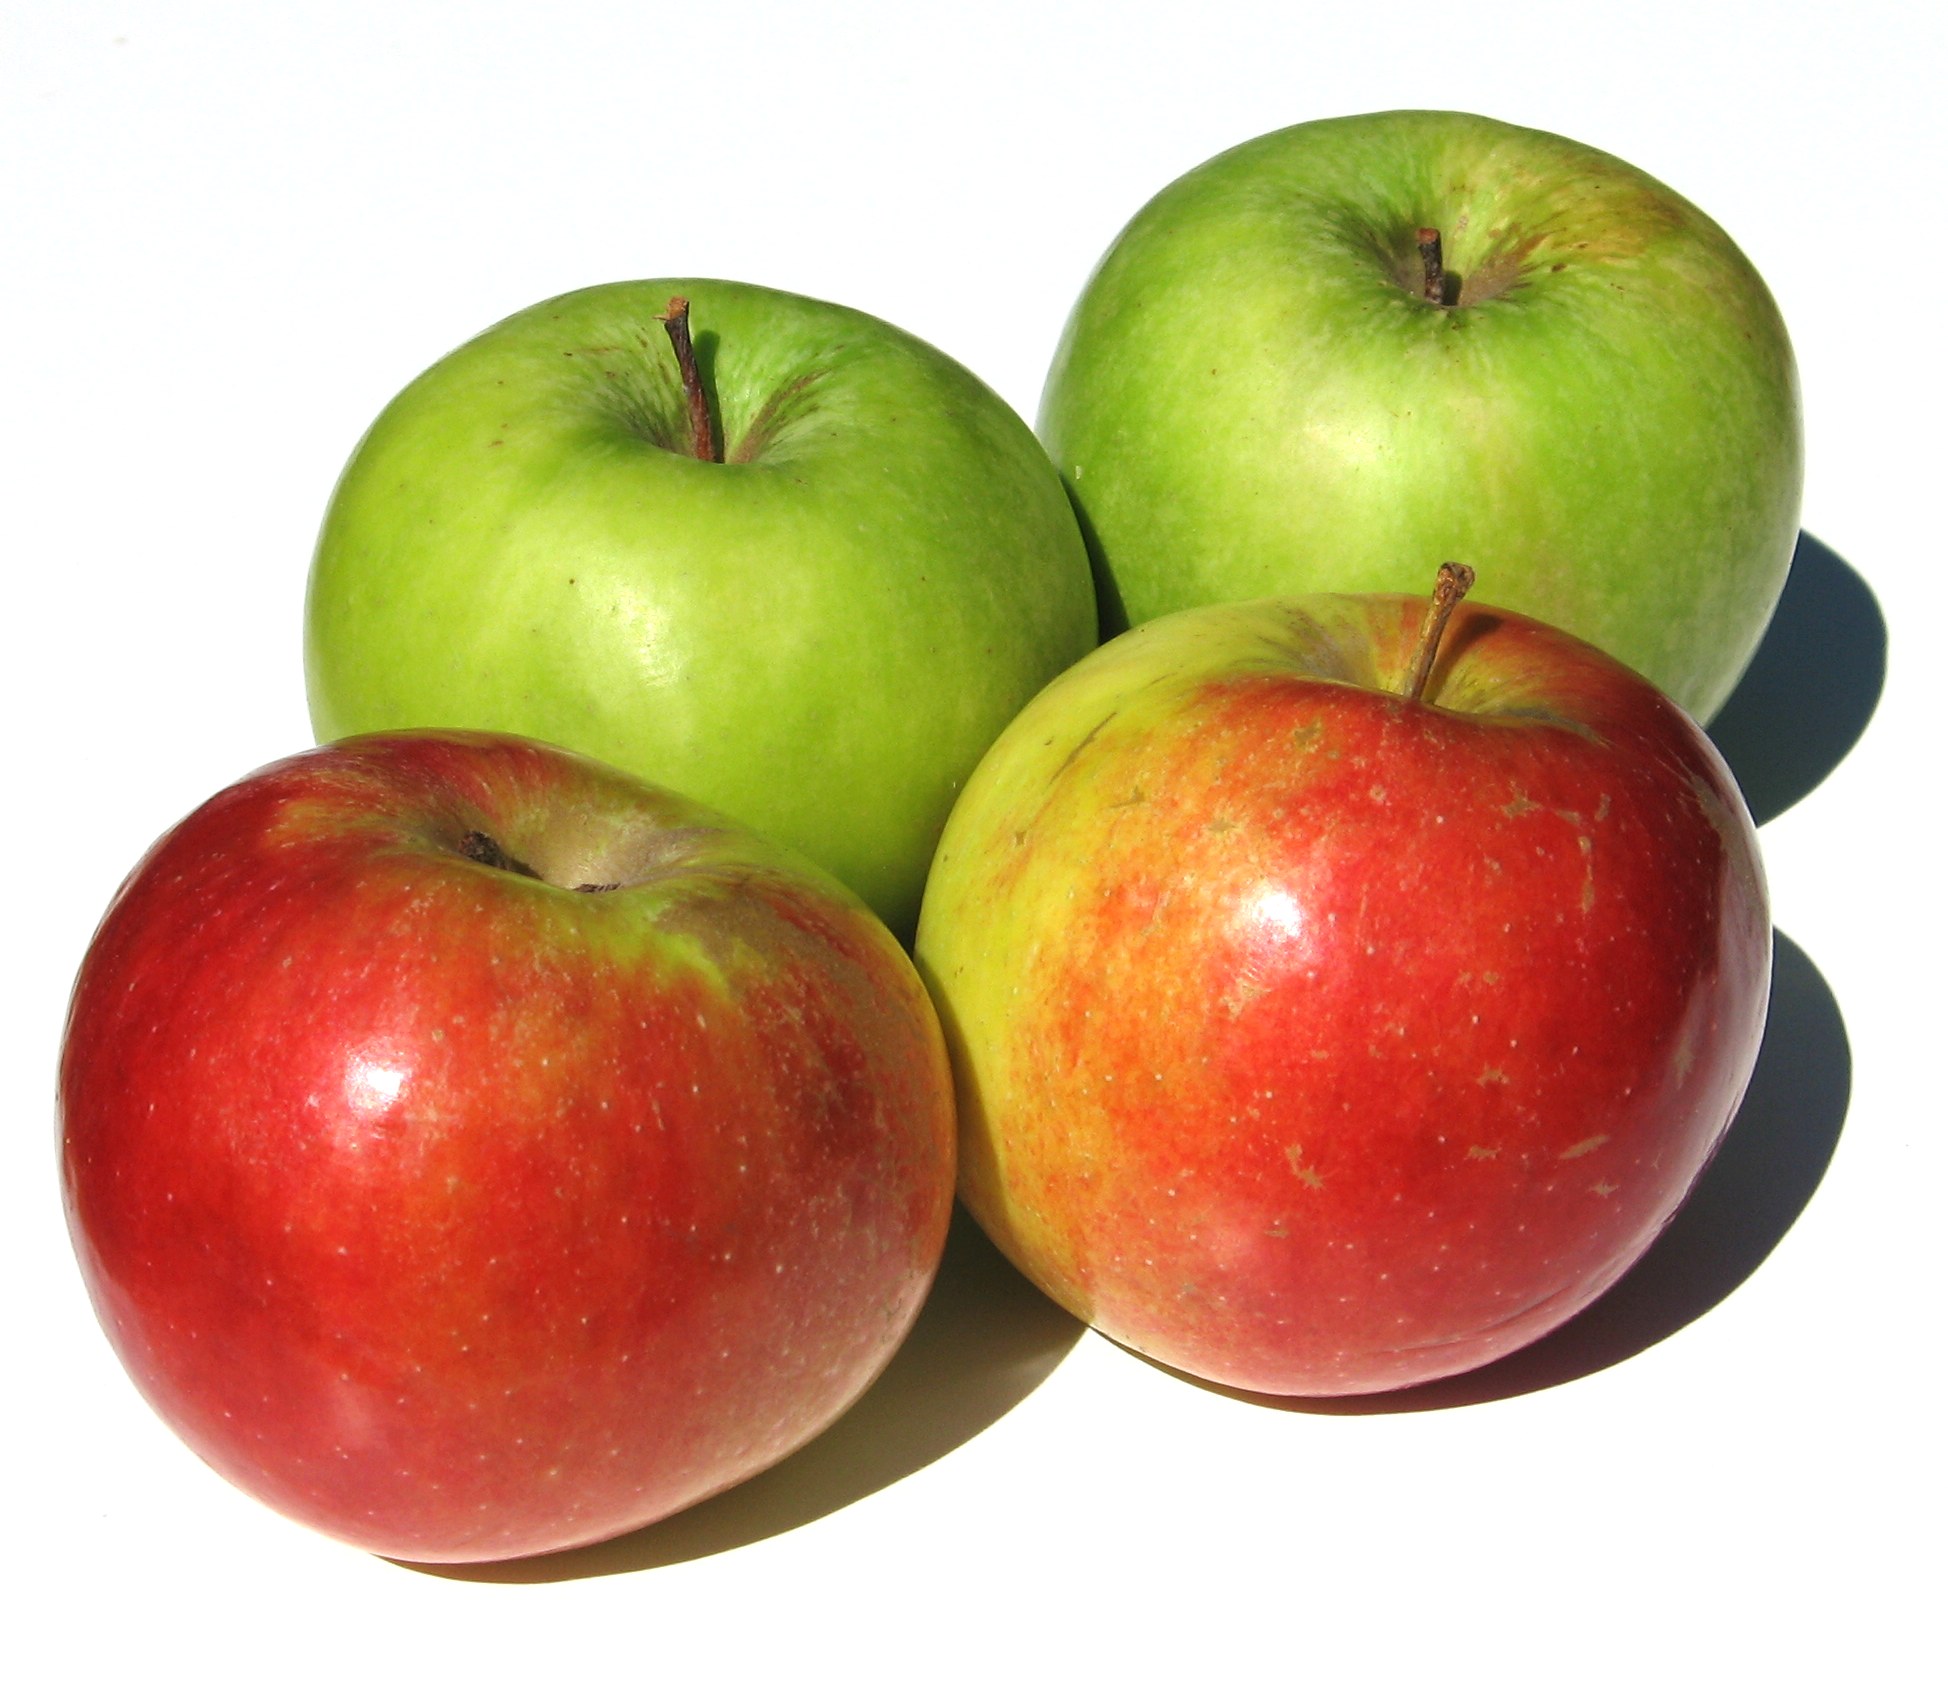 Apple 4. Яблоки грени и Голден разница. Too many Apples.